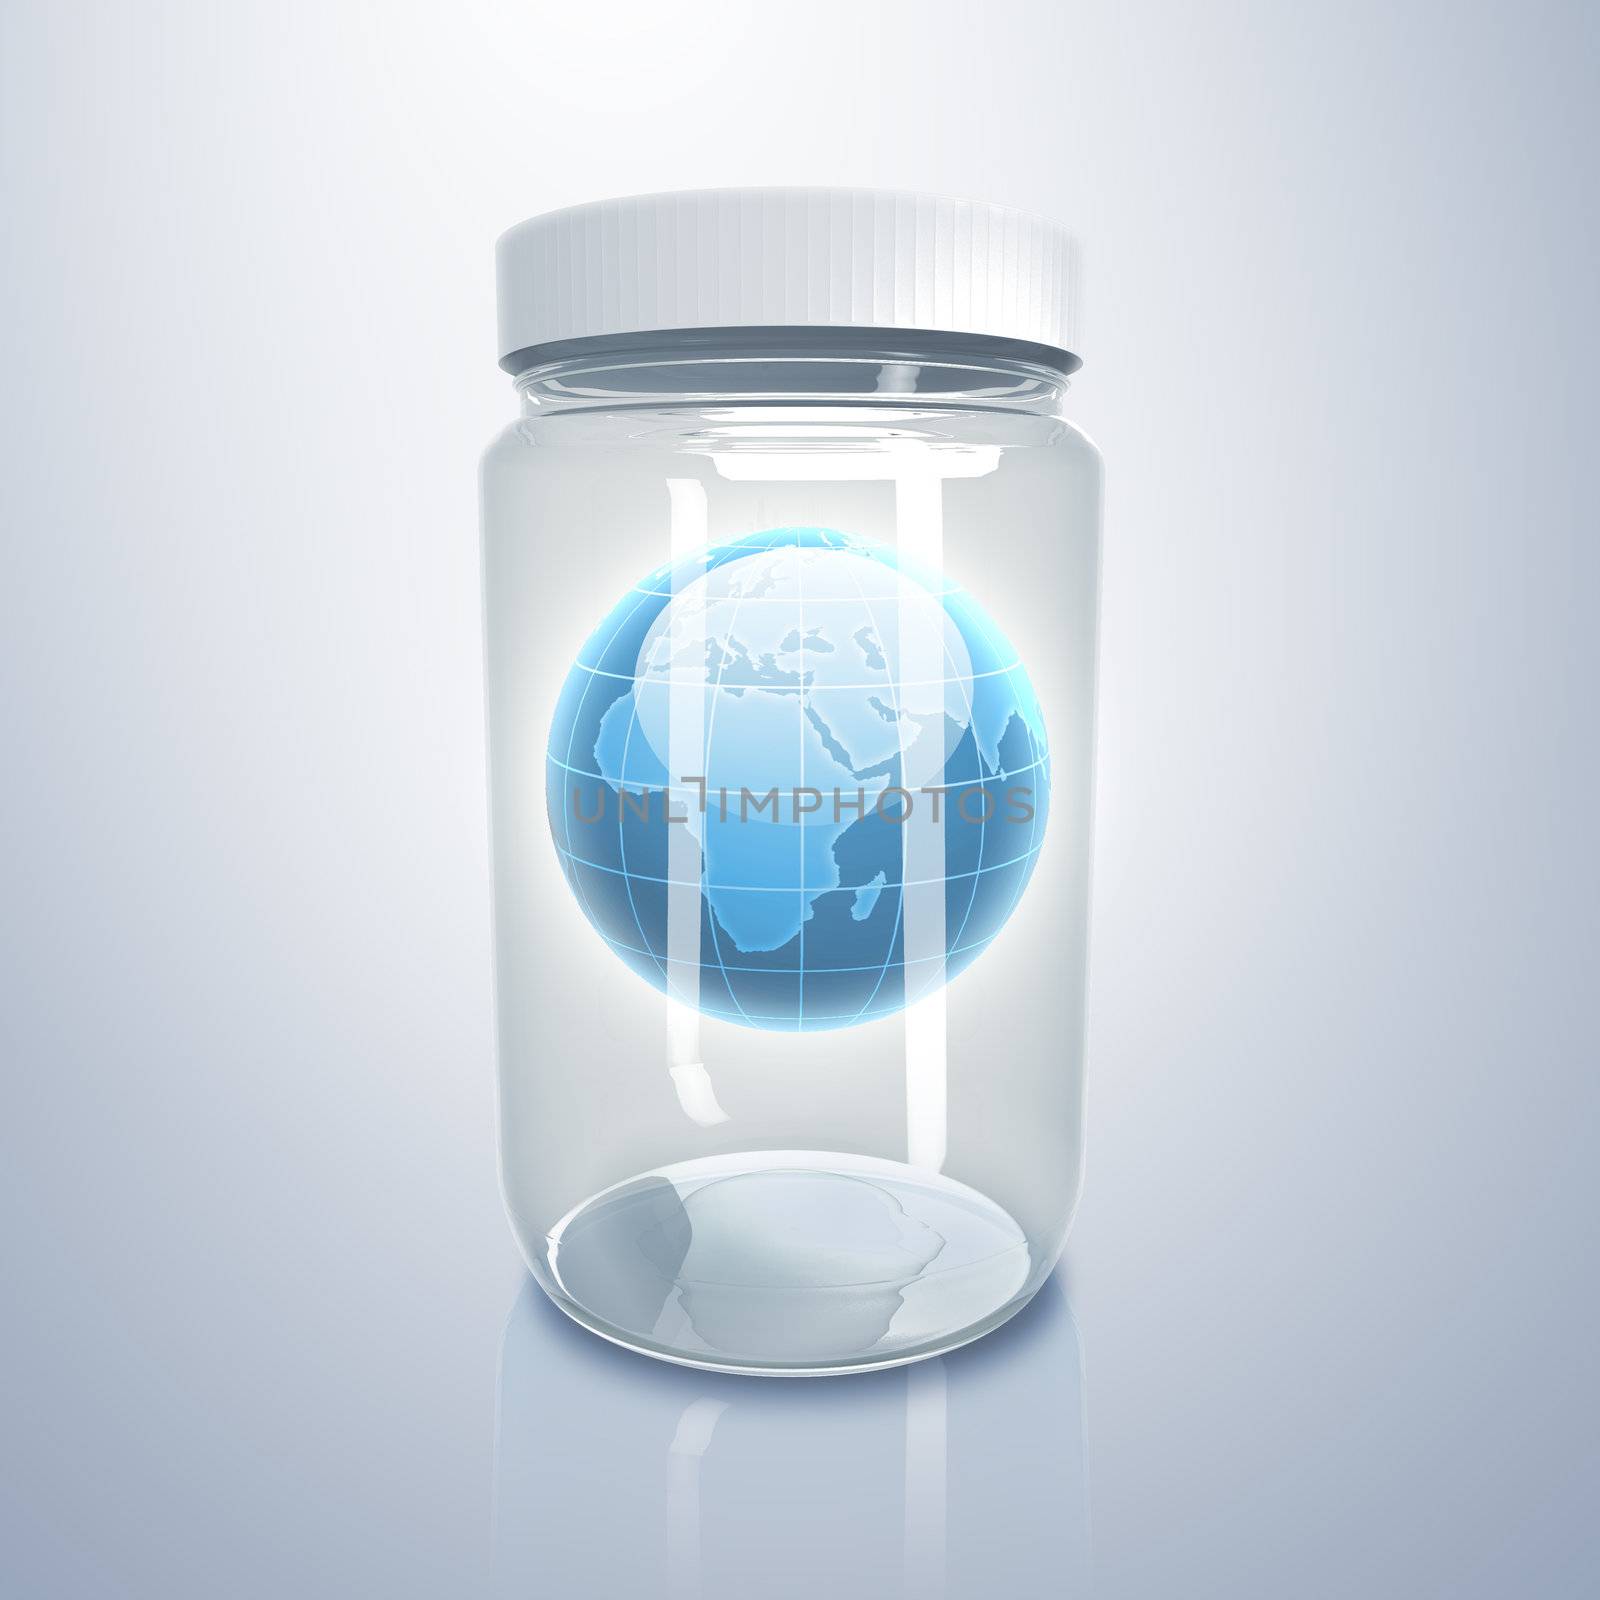 Planet earth inside glass jar by sergey_nivens